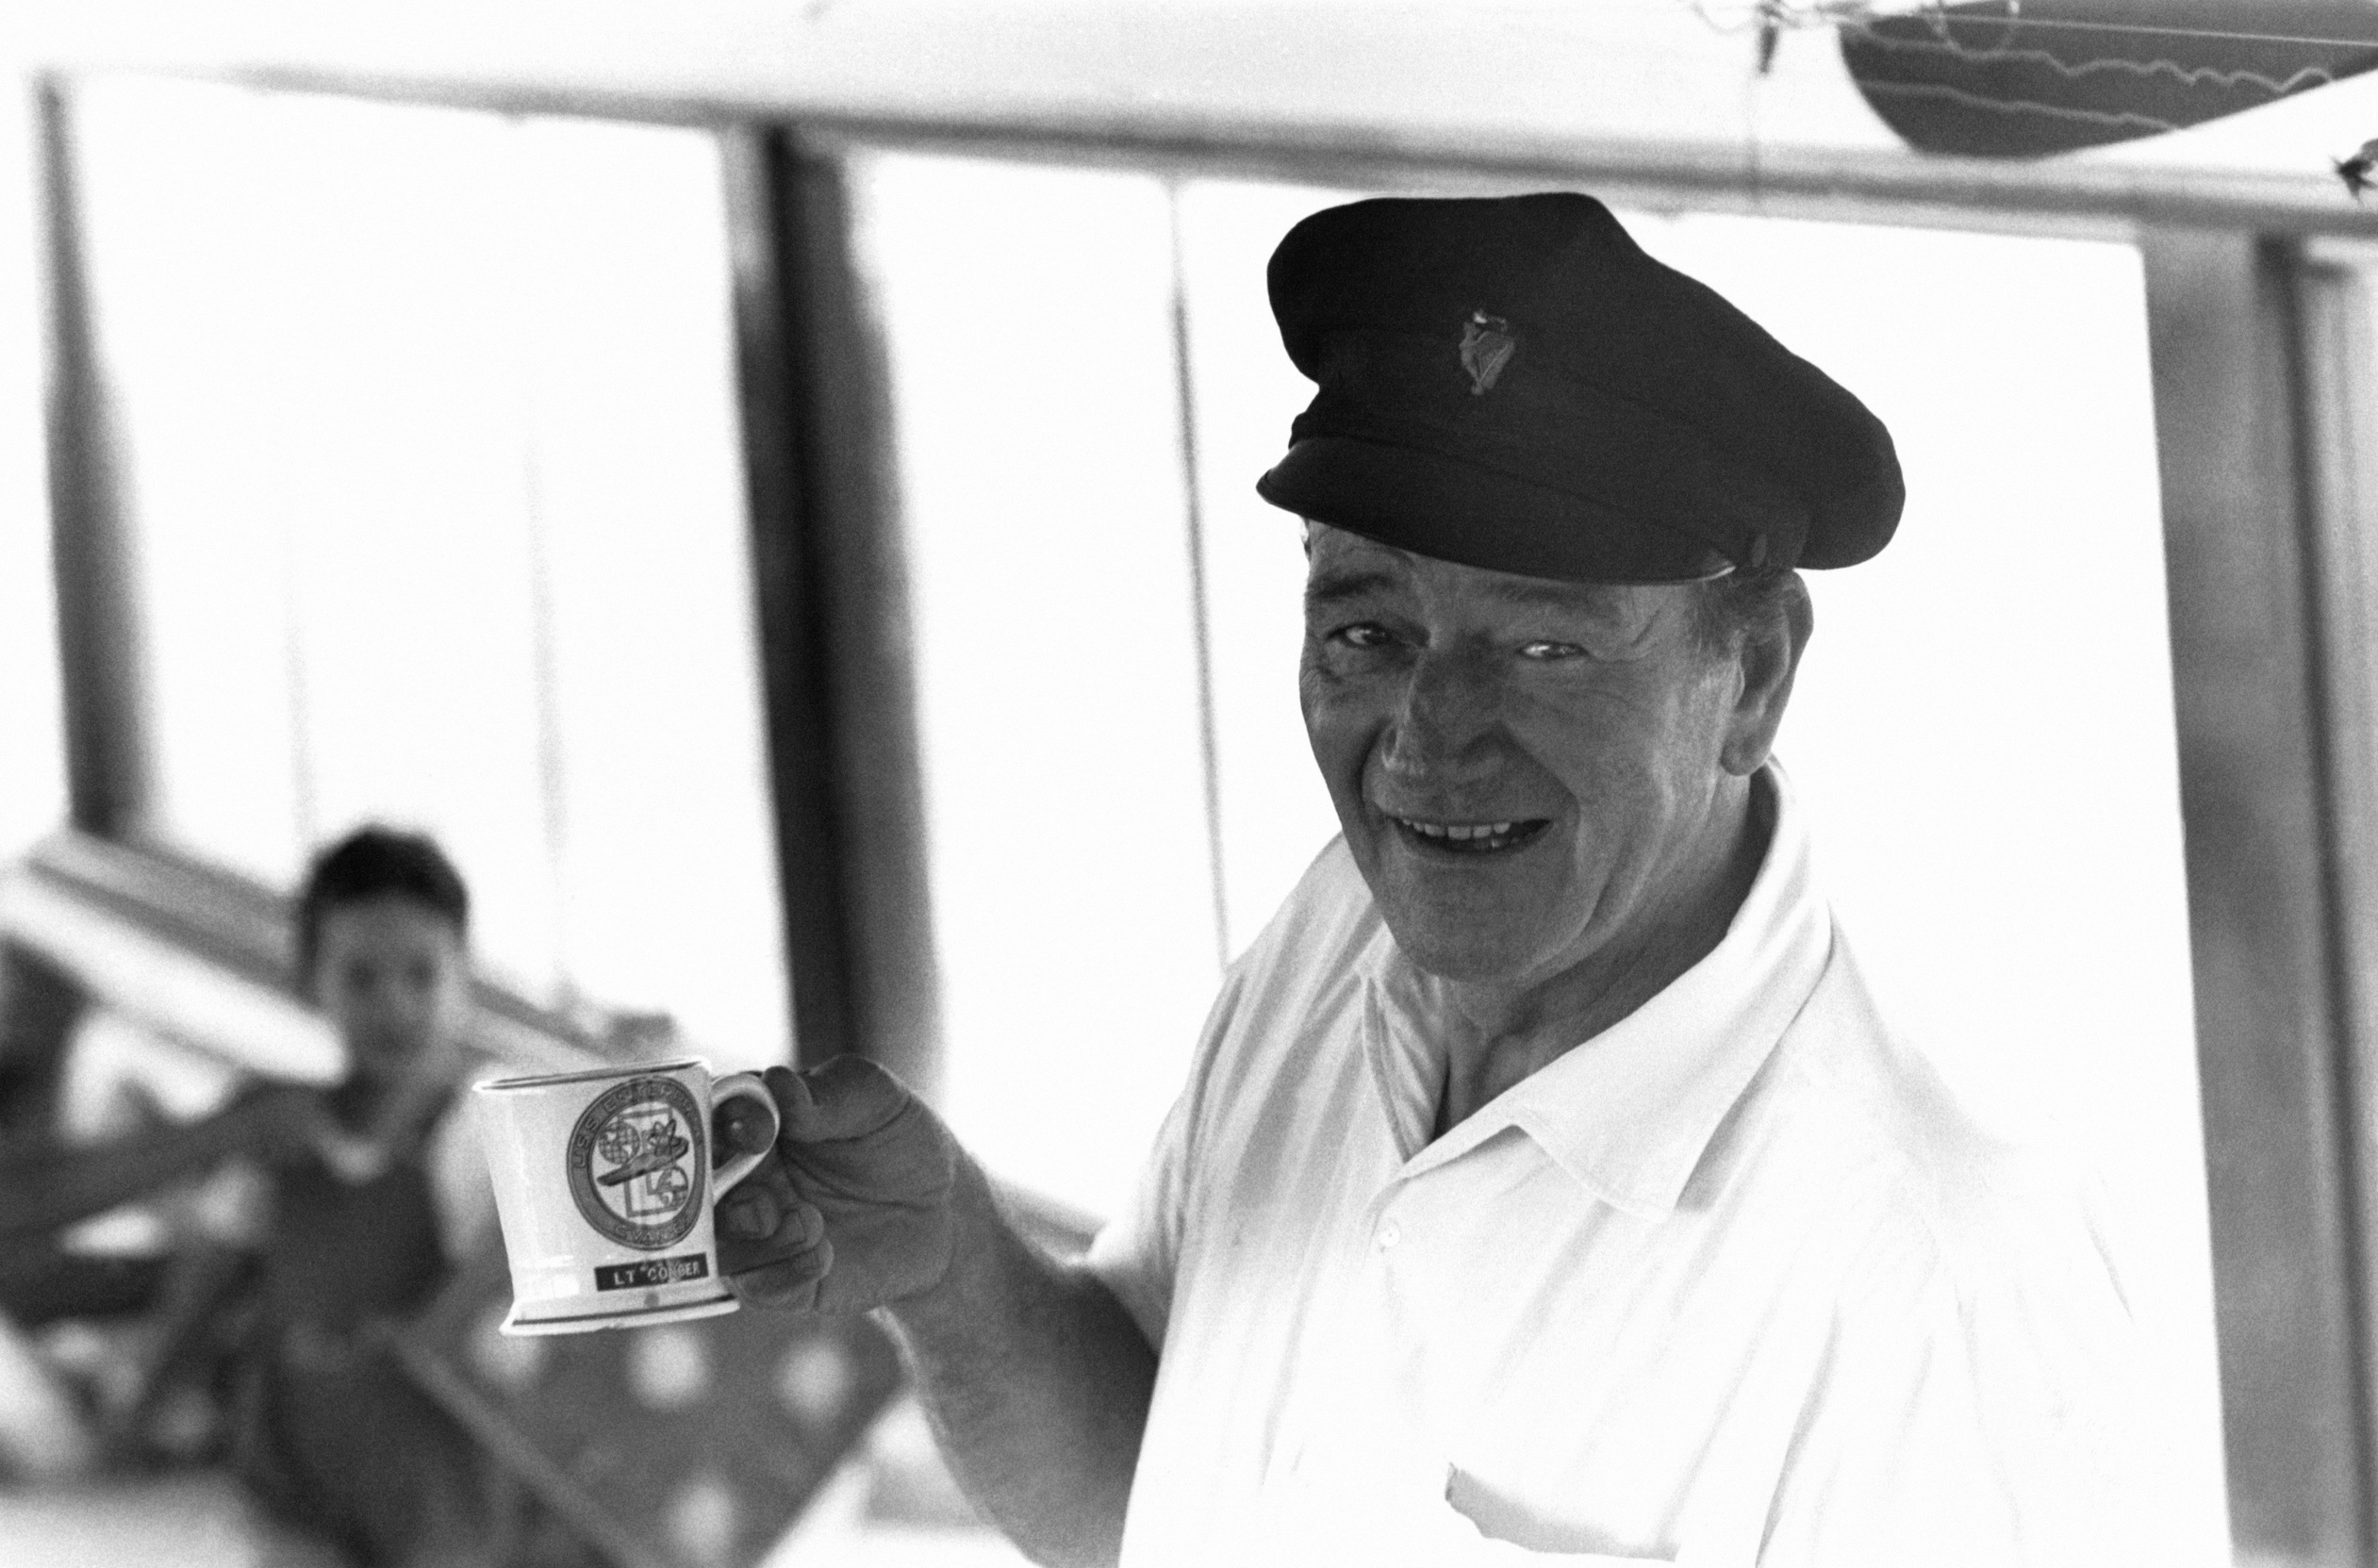 Actor John Wayne takes a portrait on a yacht